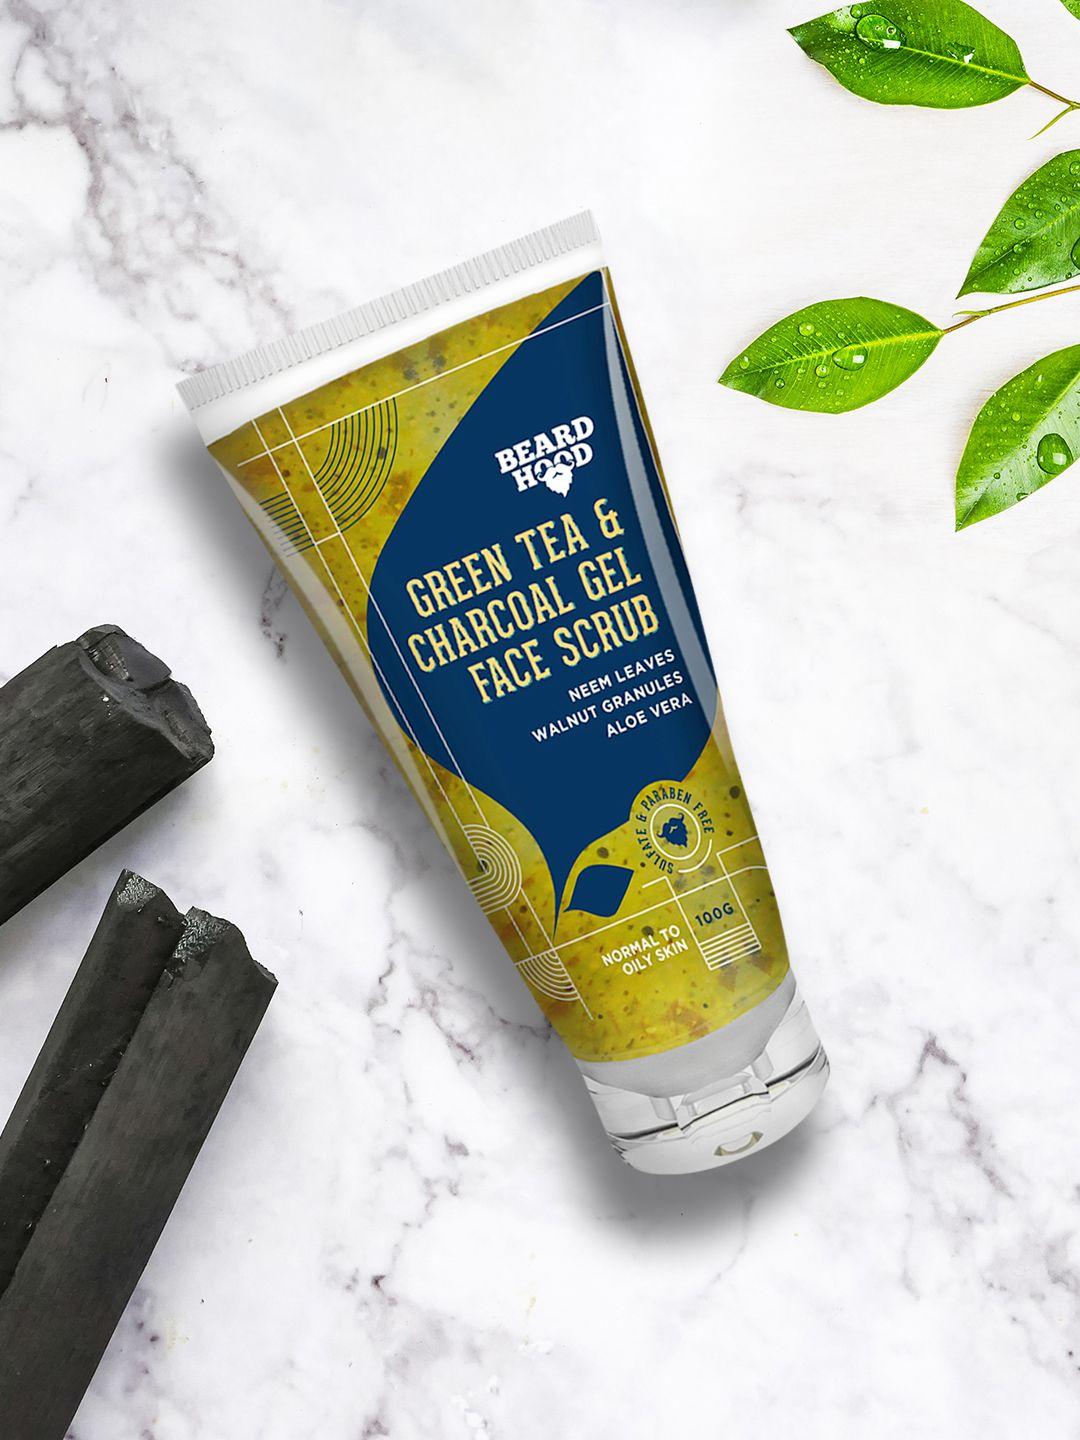 beardhood unisex green tea & charcoal gel face scrub 100g